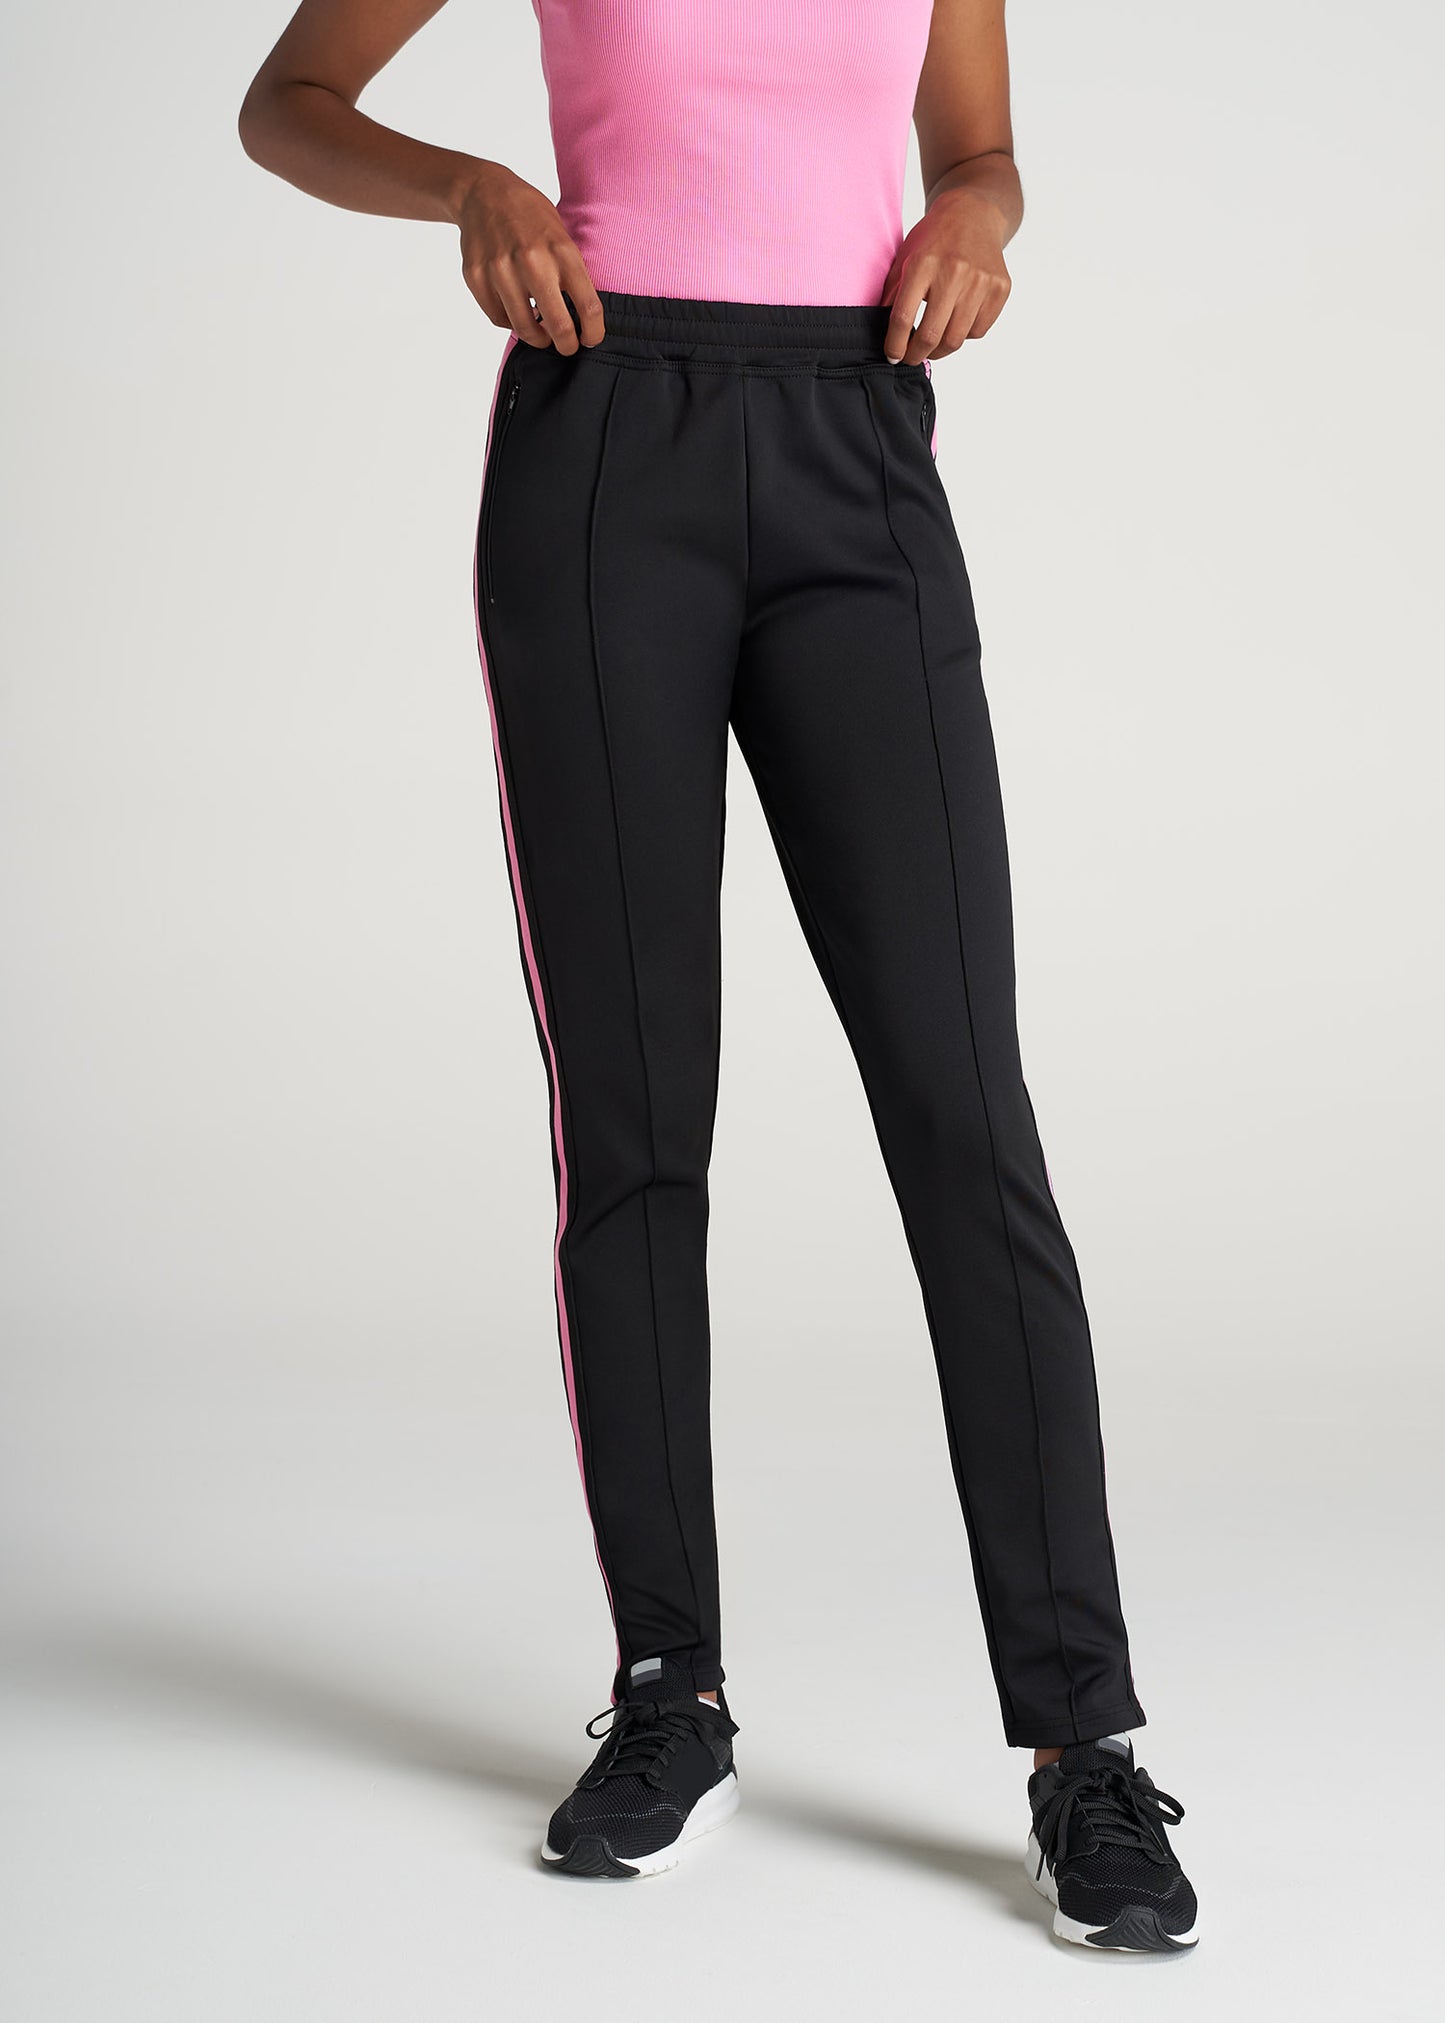 Women Pants, Athletic Track Pants for Women